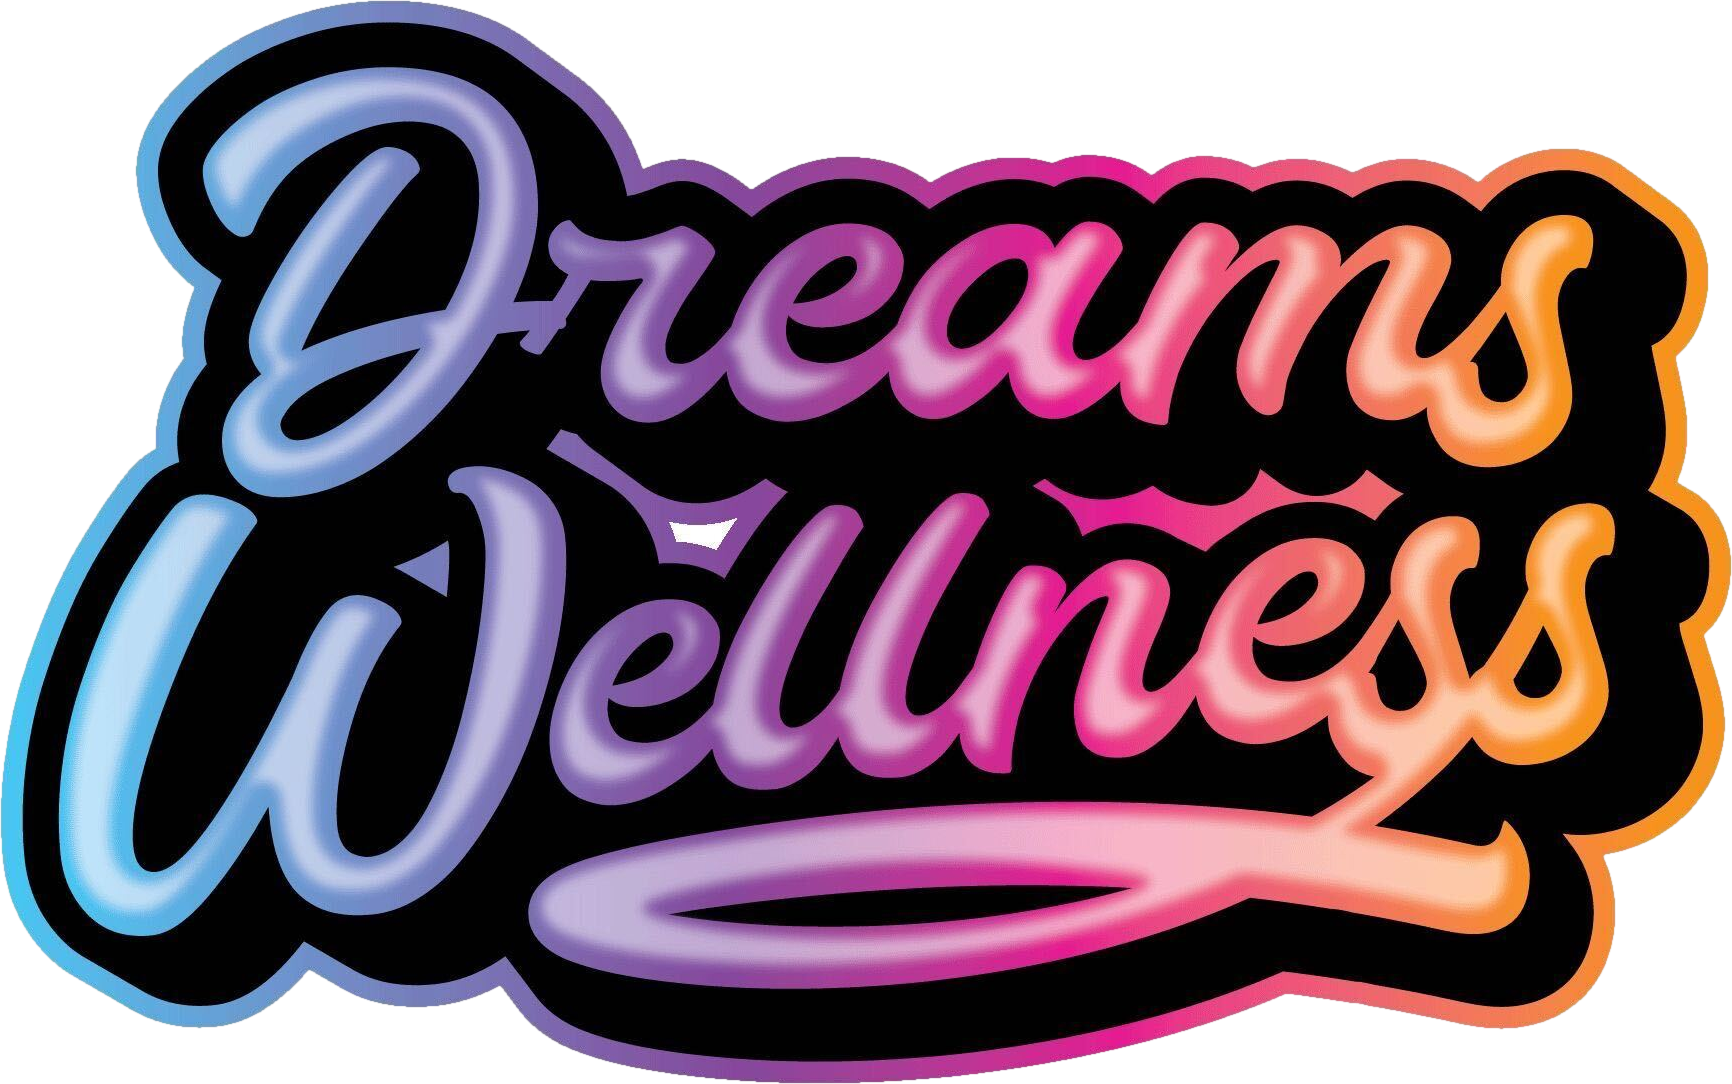 Dreams Wellness DC Logo